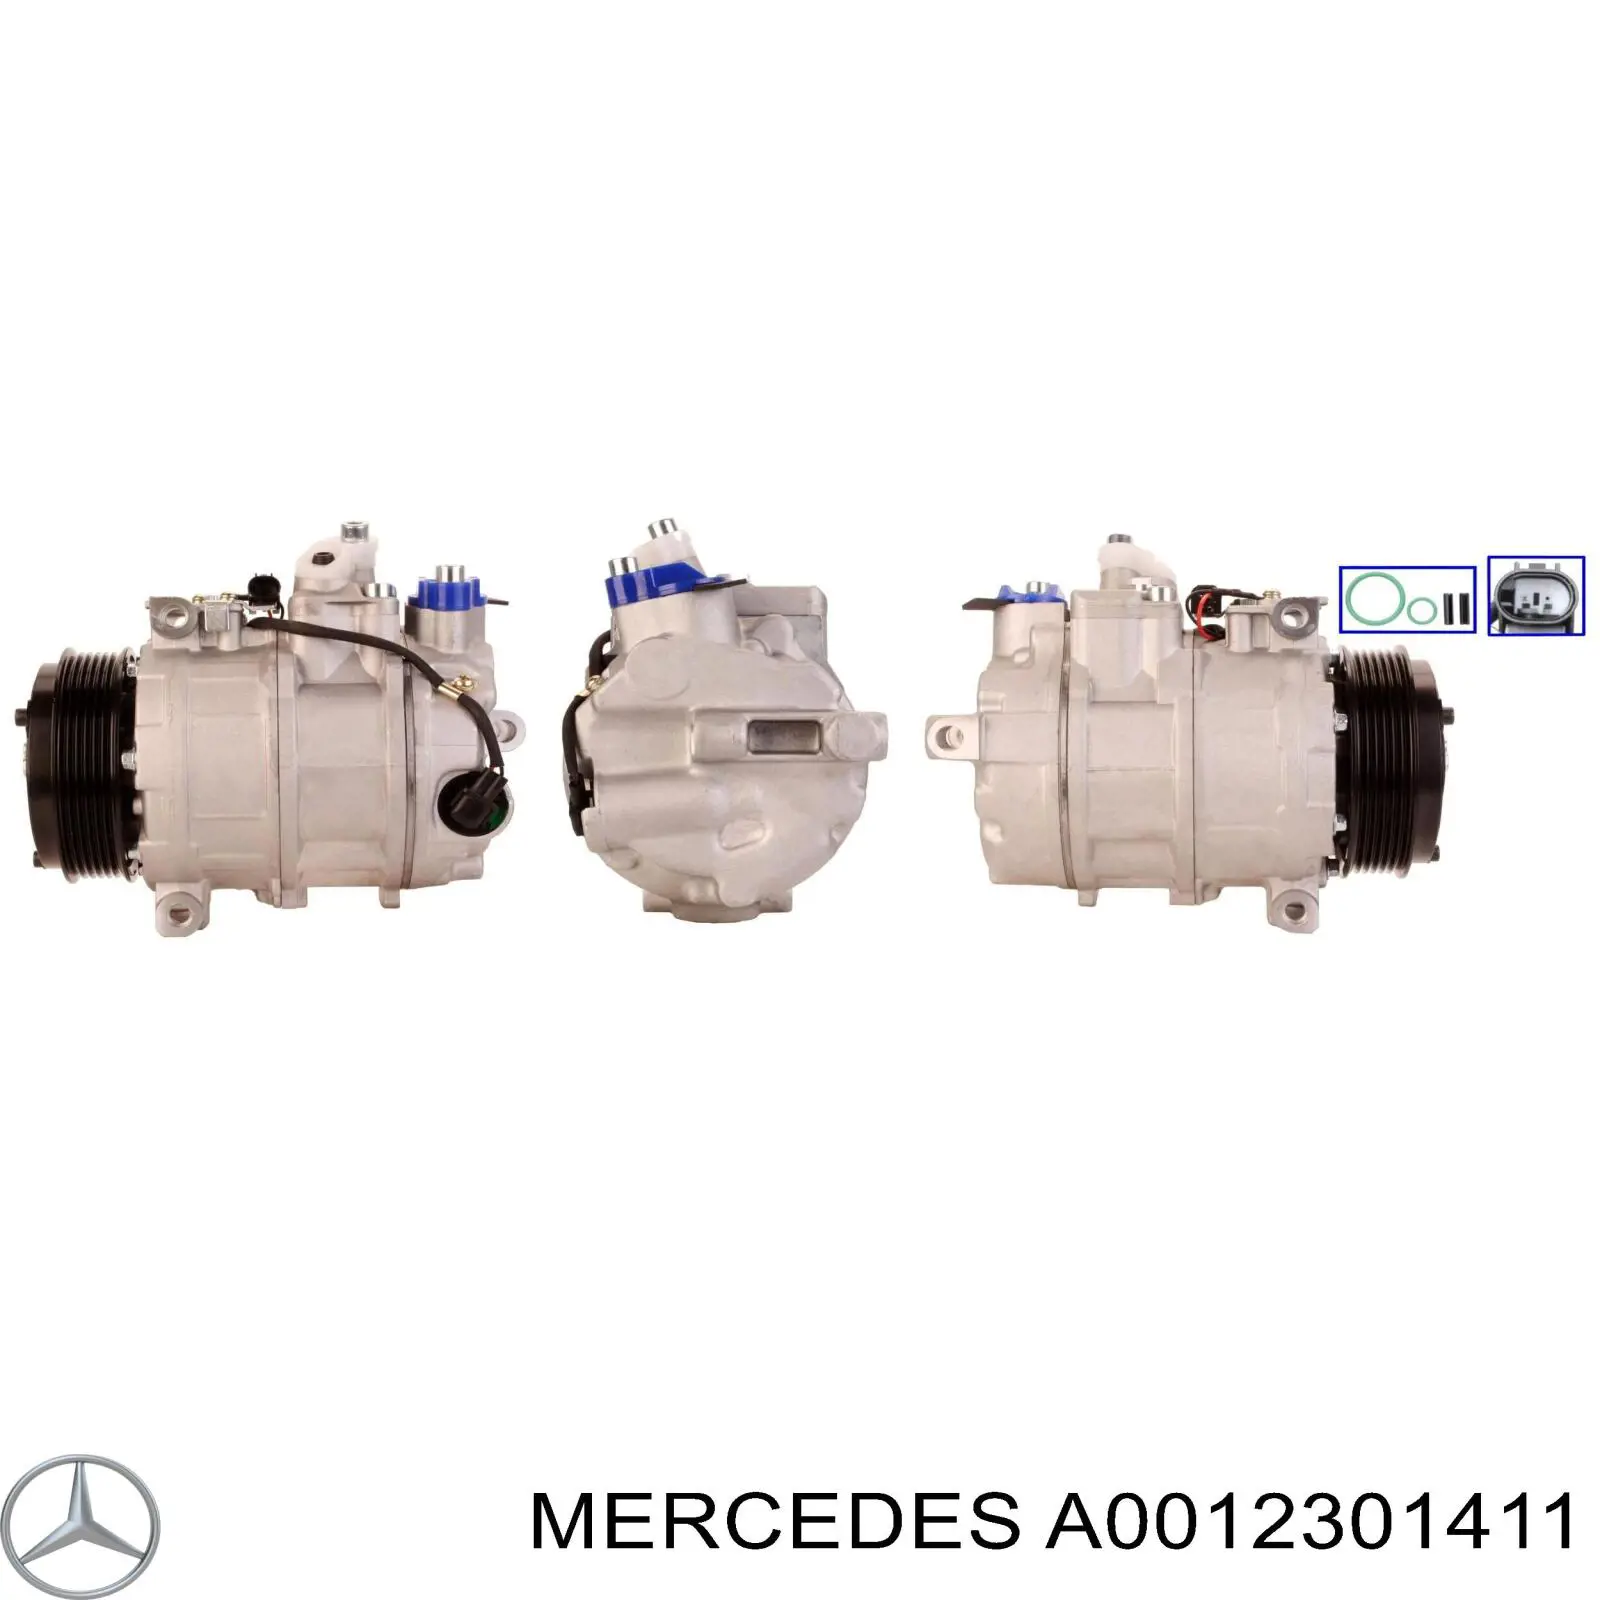 A0012301411 Mercedes compresor de aire acondicionado